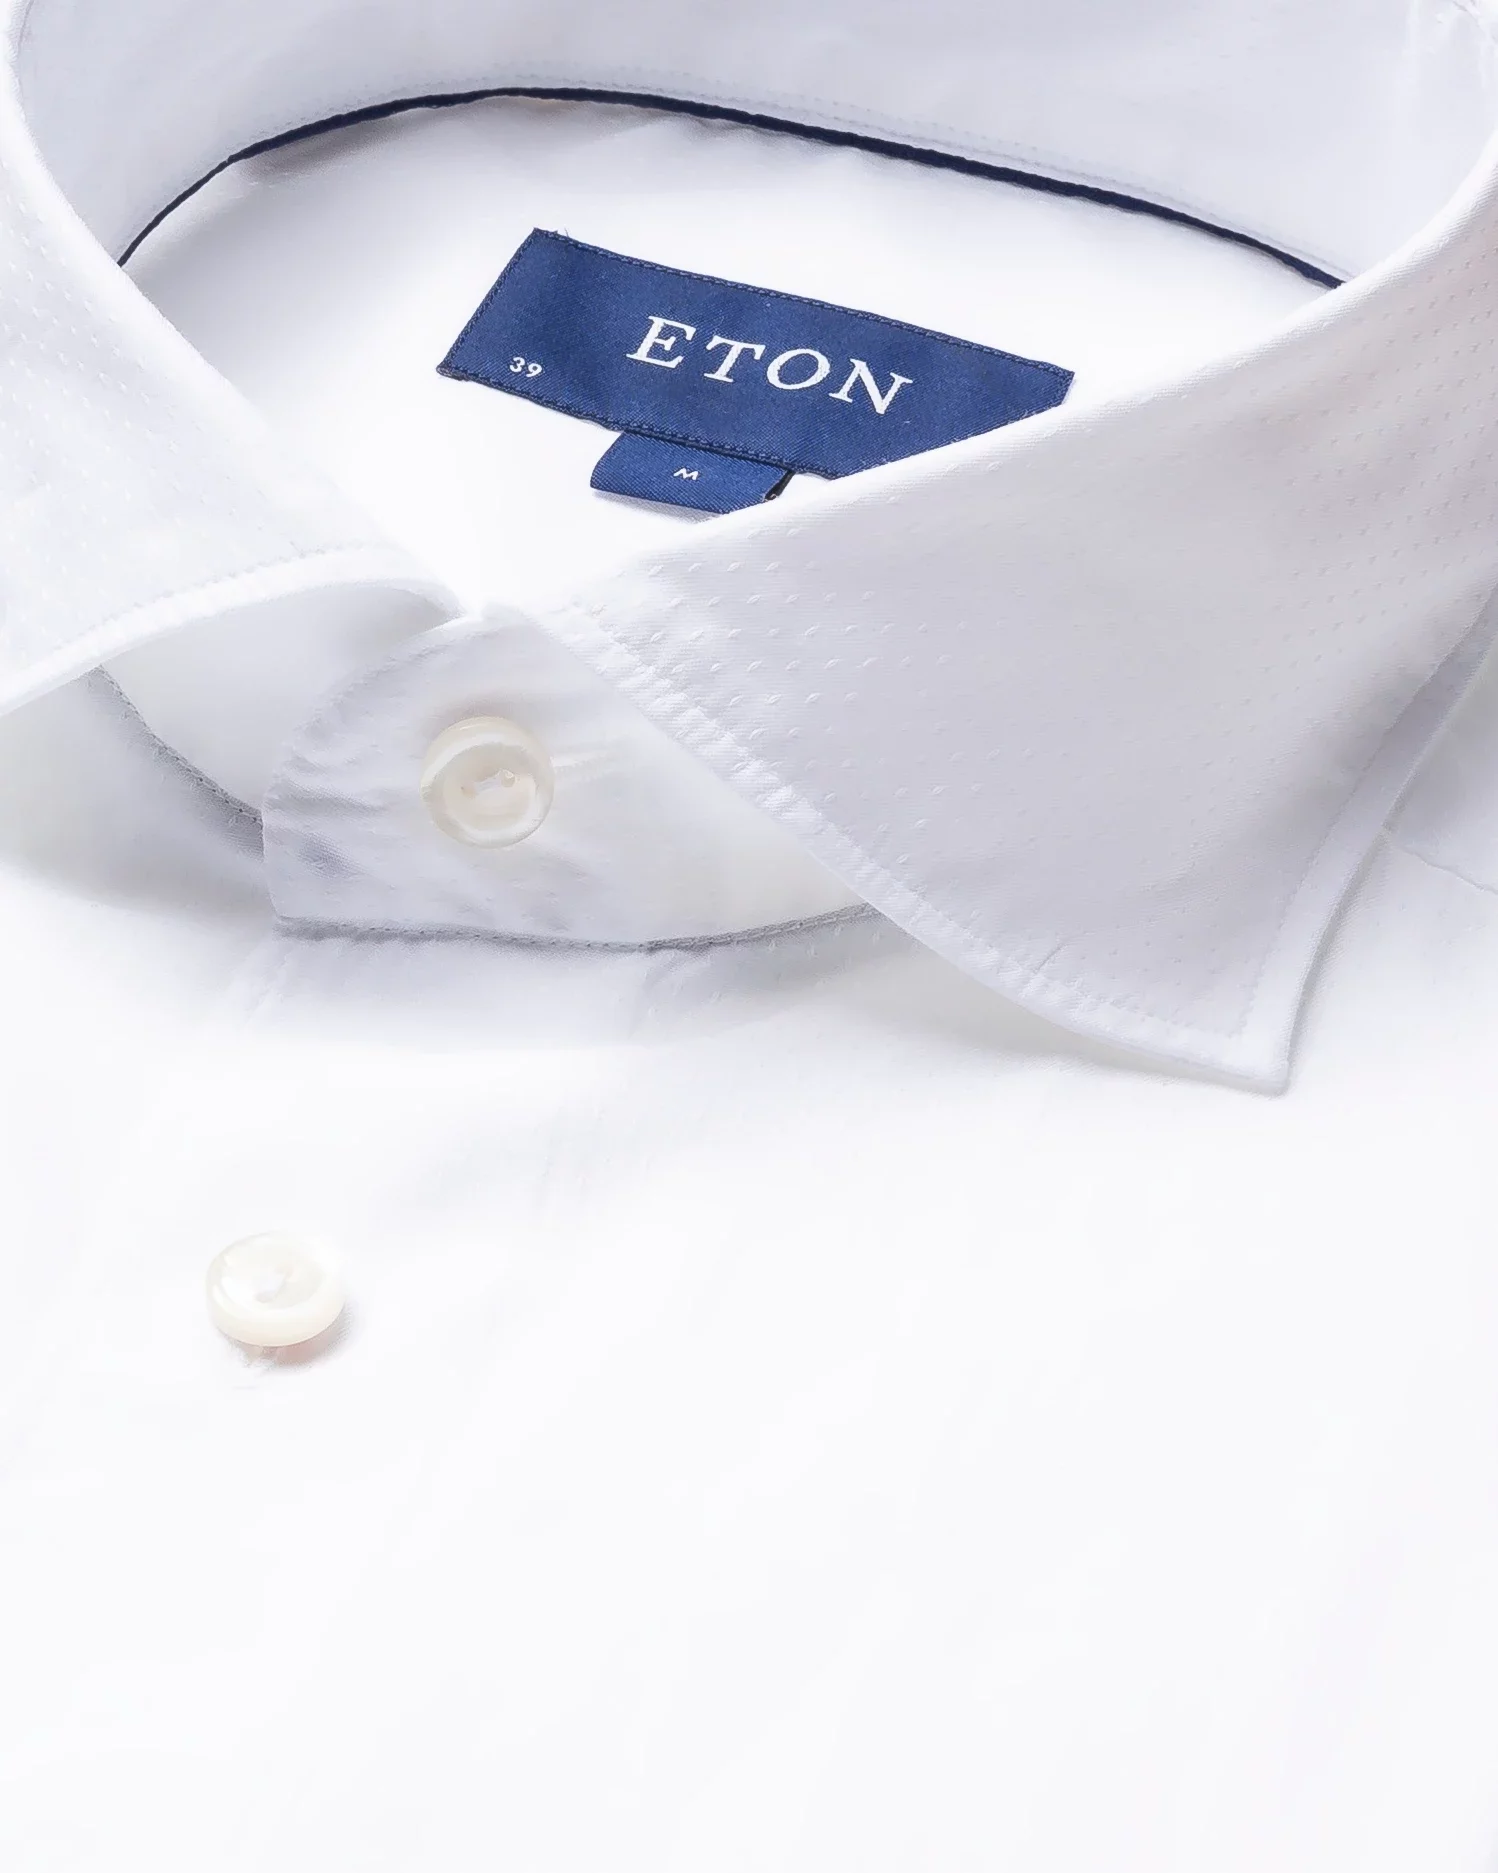 Eton - white lustre dotted dobby shirt soft